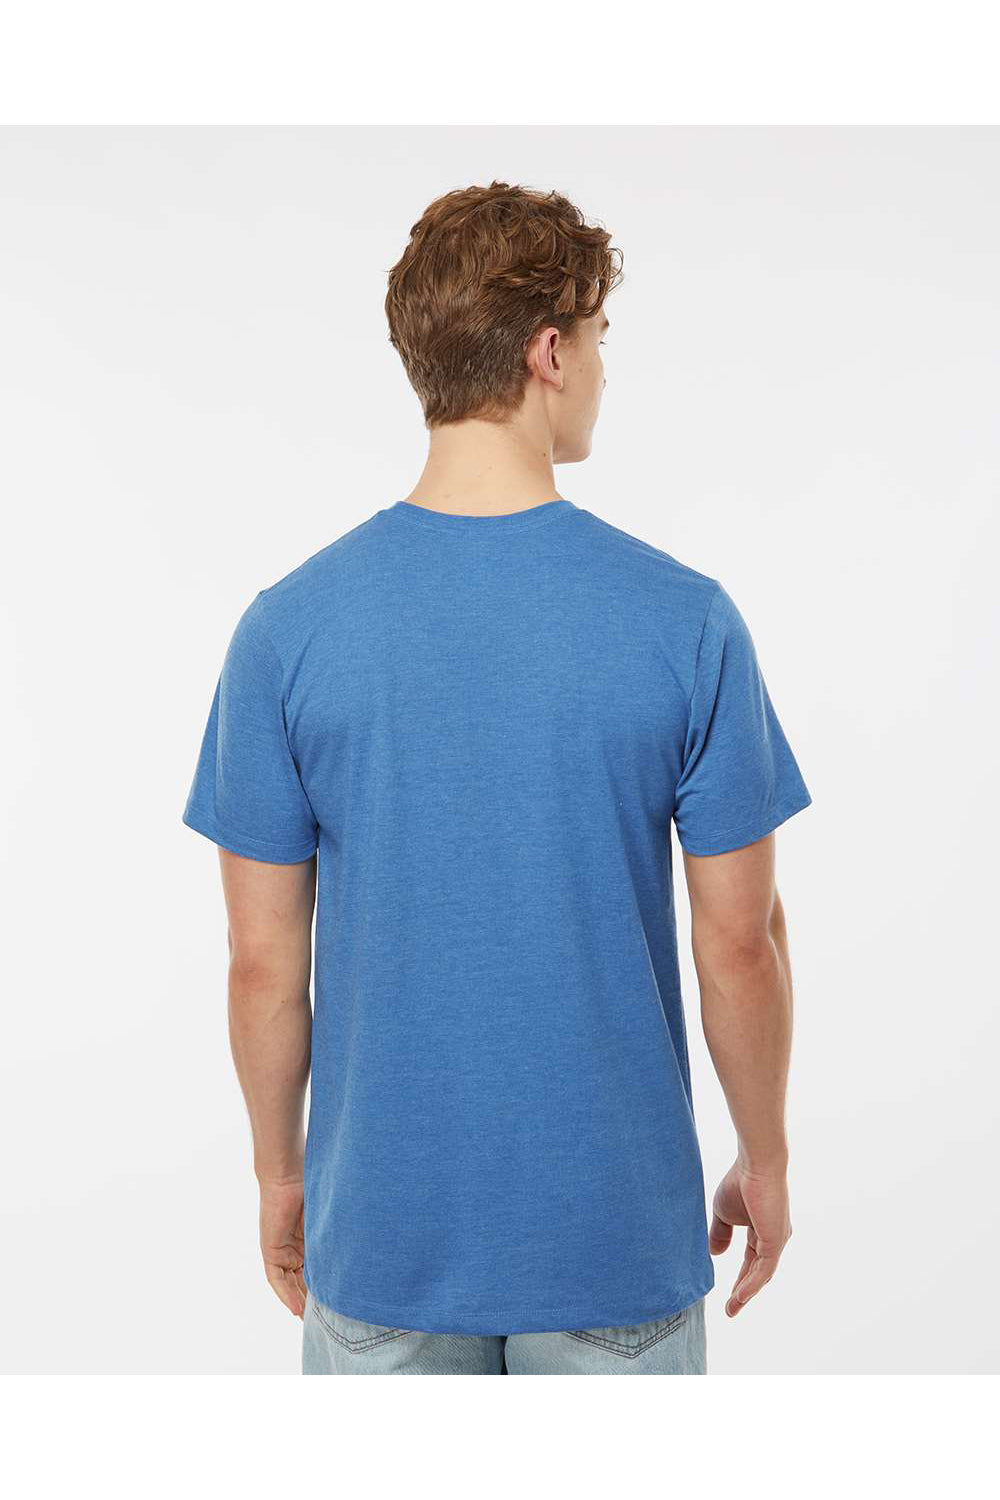 Tultex 541 Mens Premium Short Sleeve Crewneck T-Shirt Heather Royal Blue Model Back